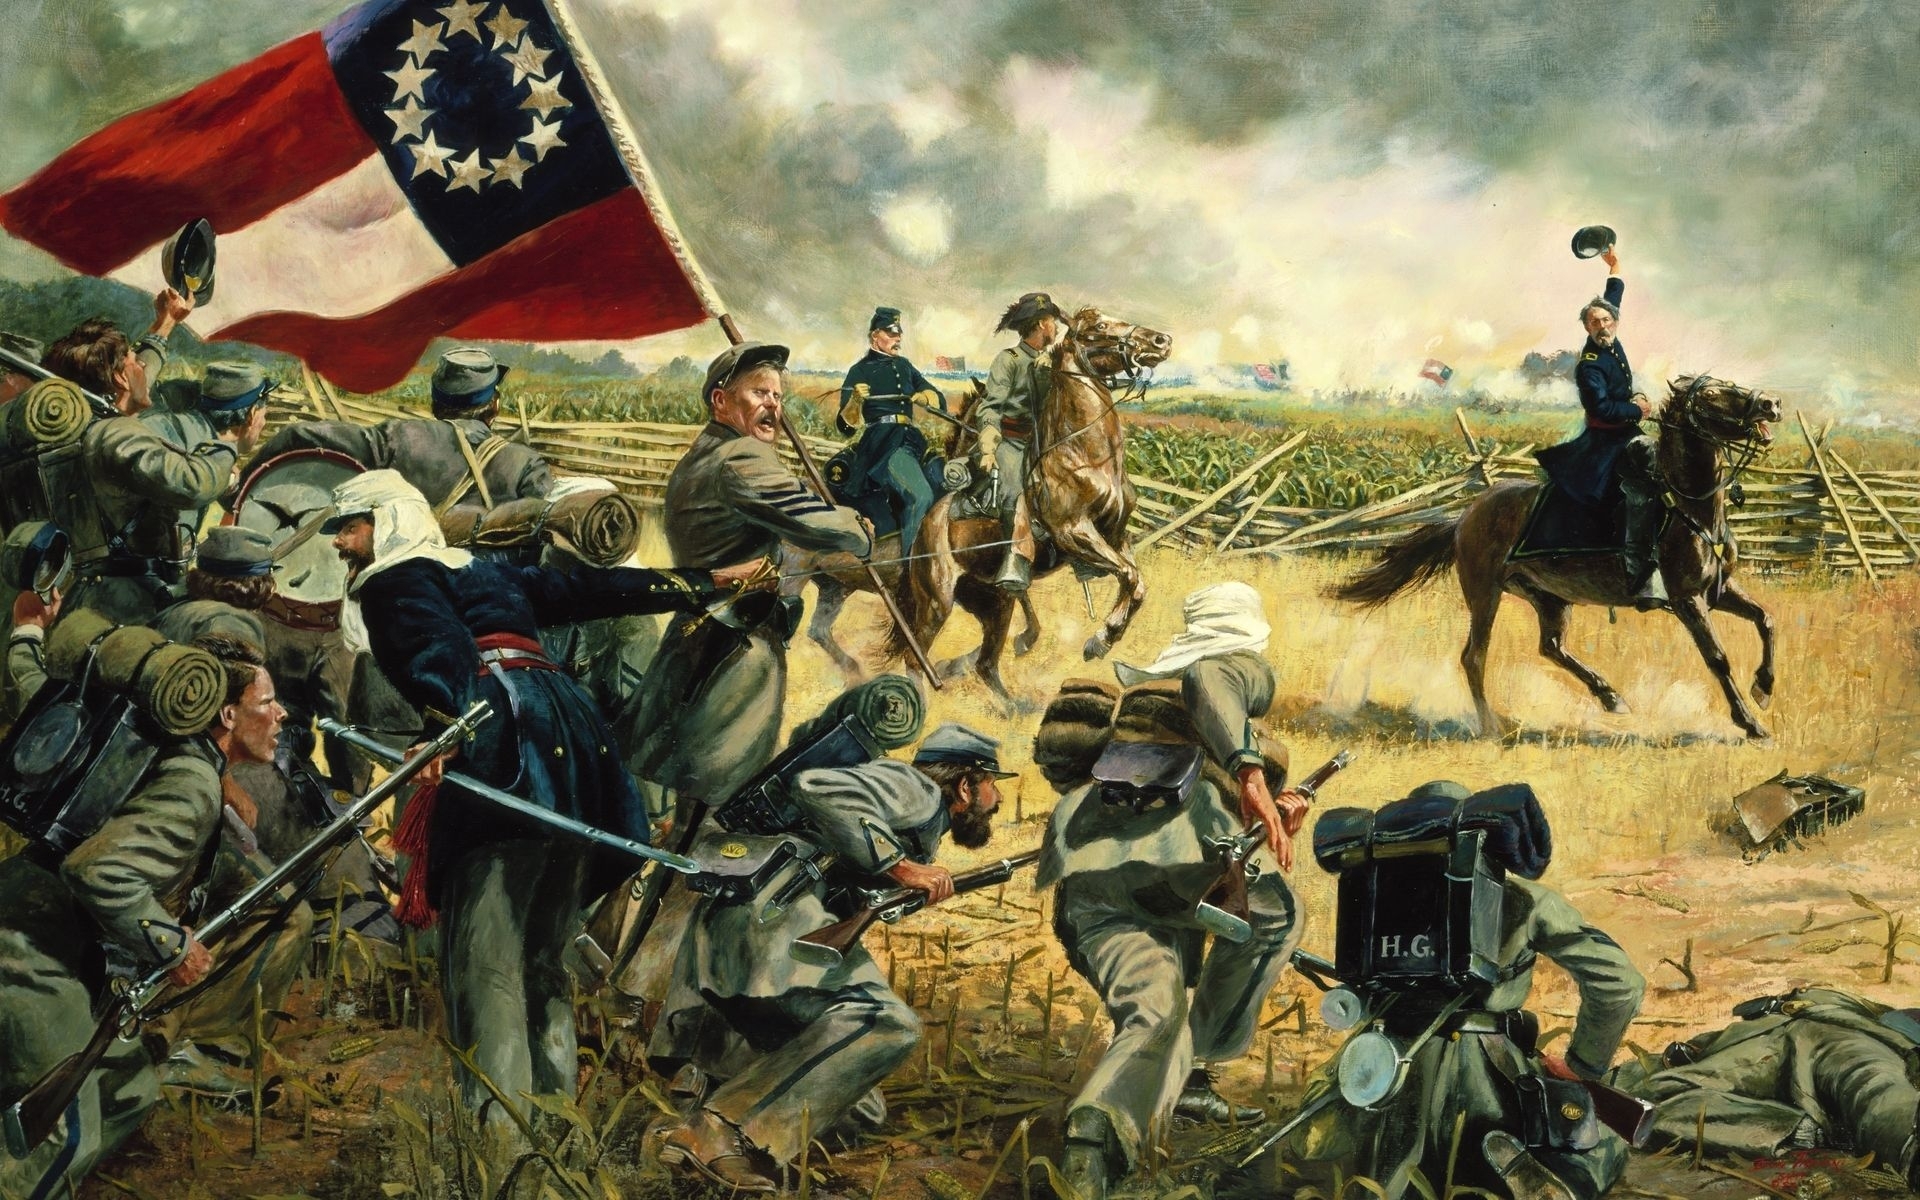 10 Latest American Civil War Wallpaper Hd FULL HD 1920×1080 For PC Background